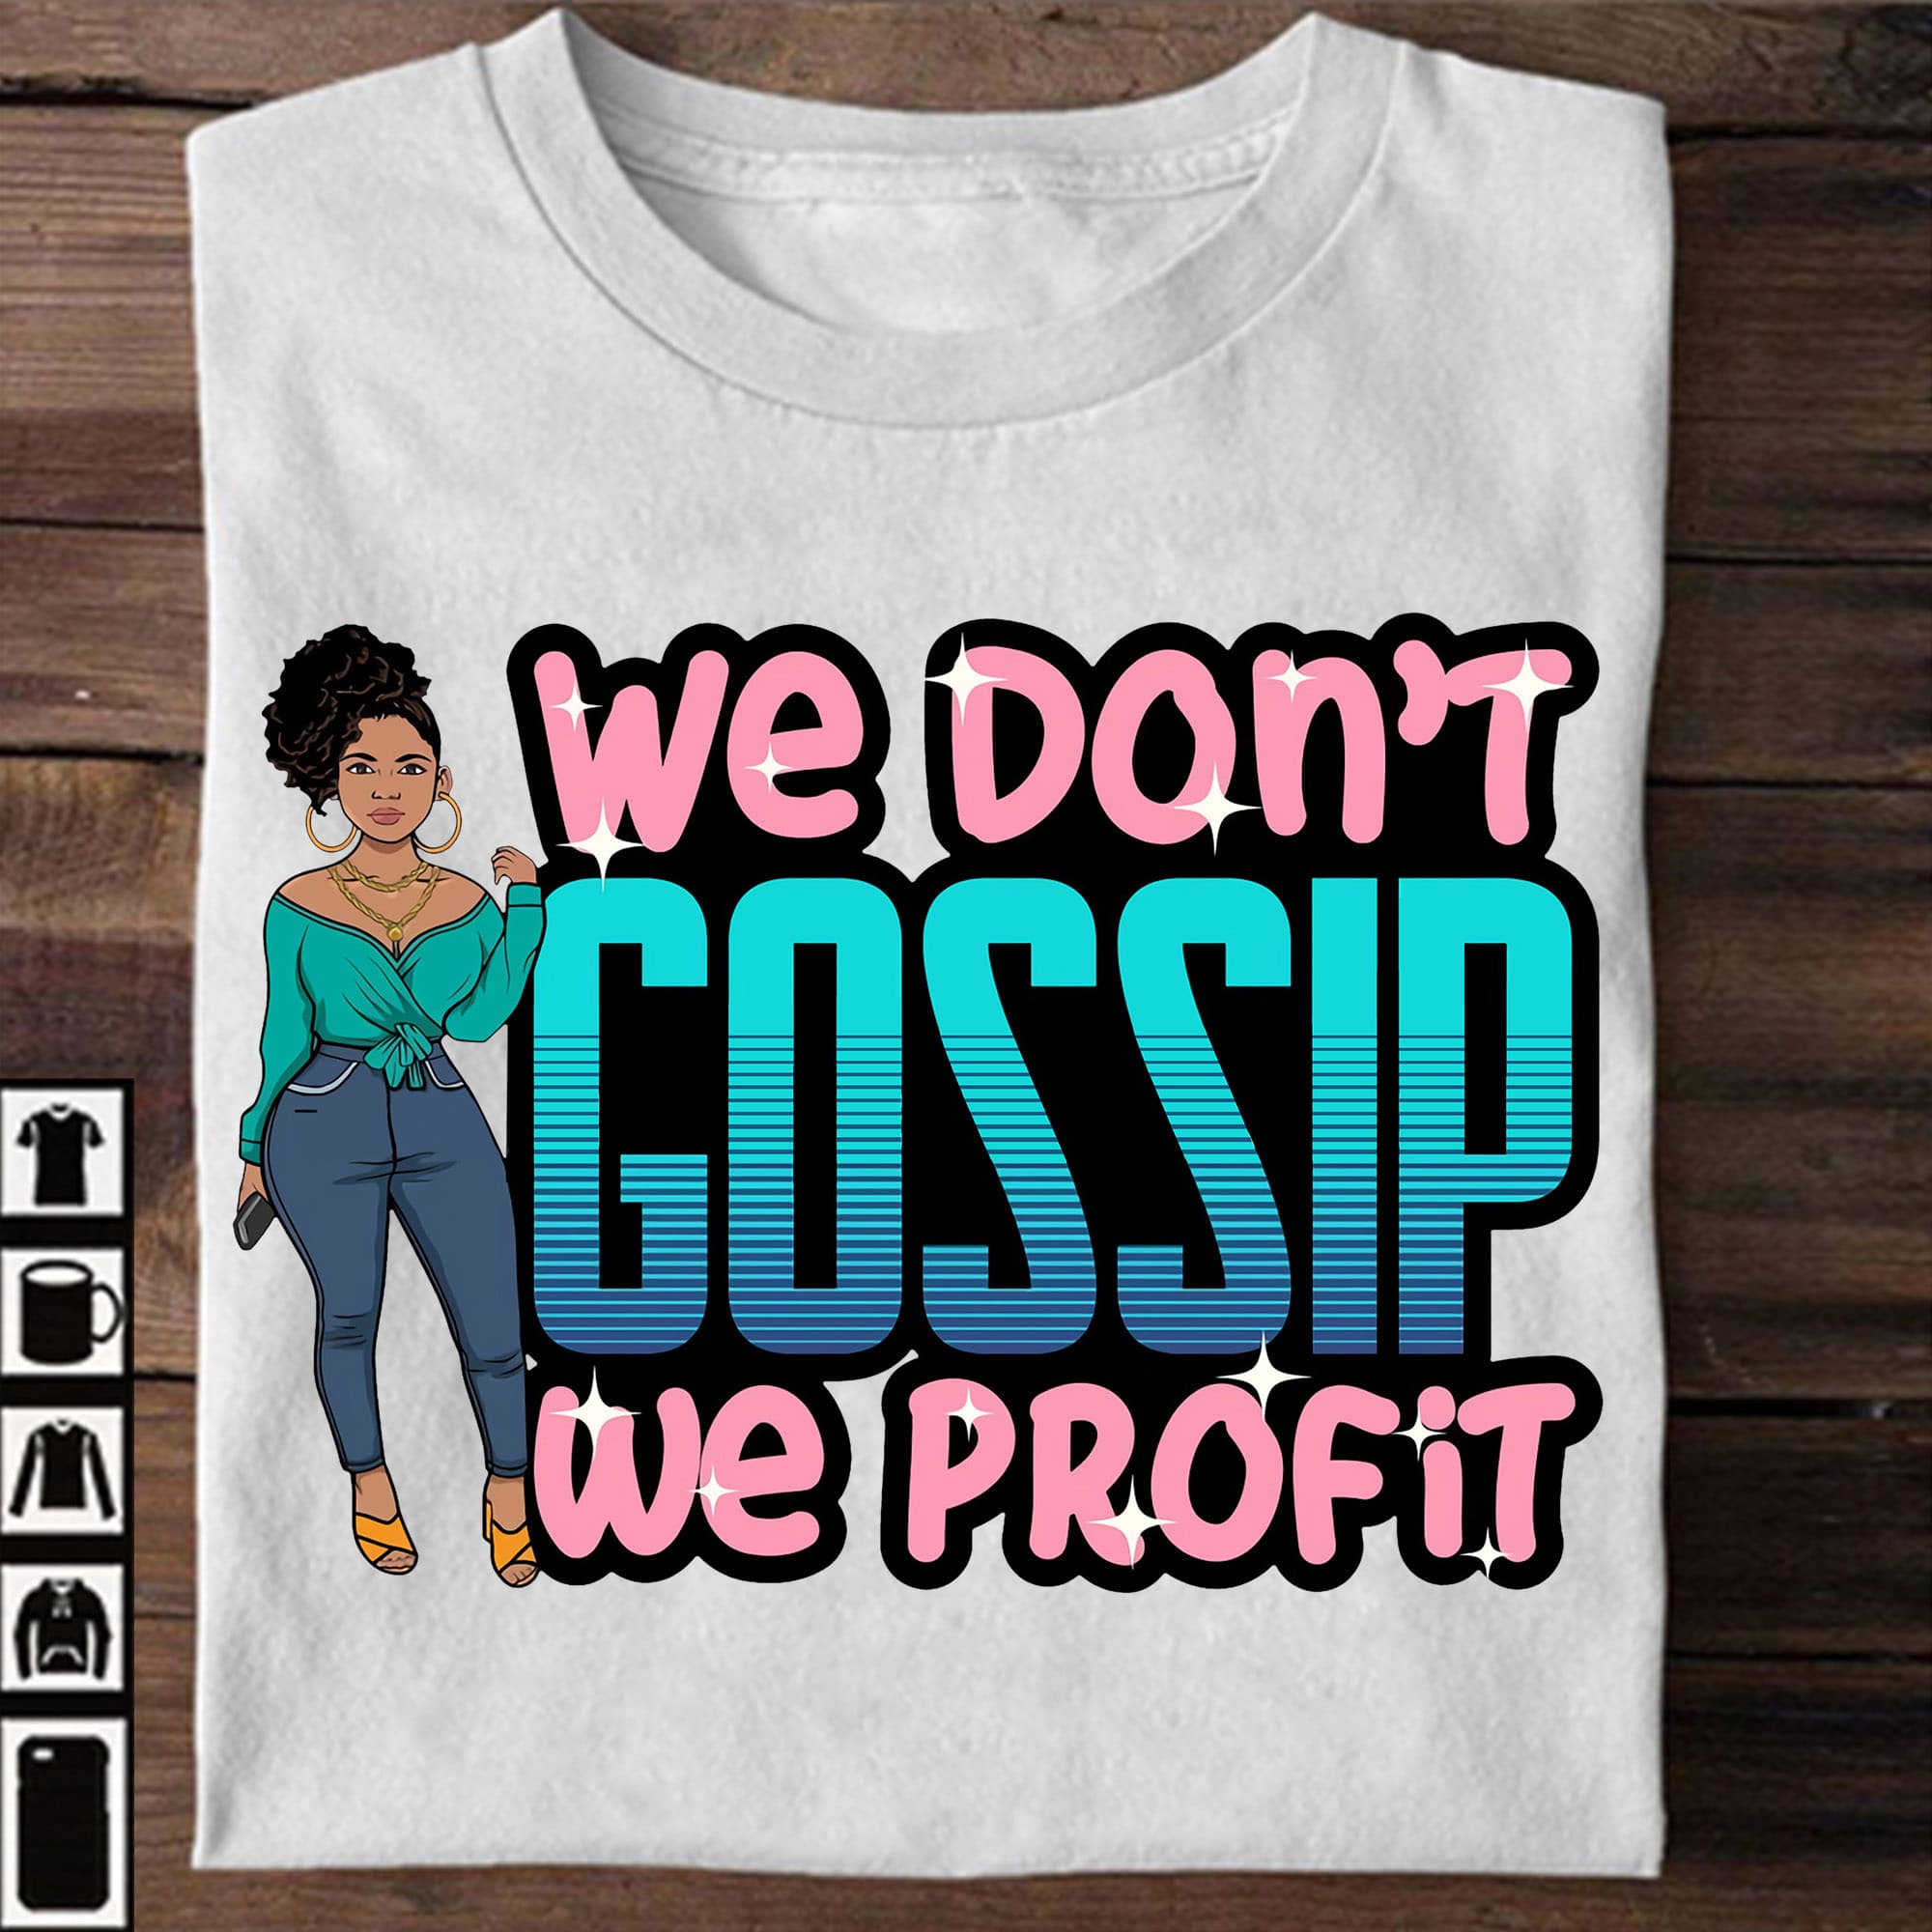 We don't gossip, we profit - Black girl T-shirt, black community